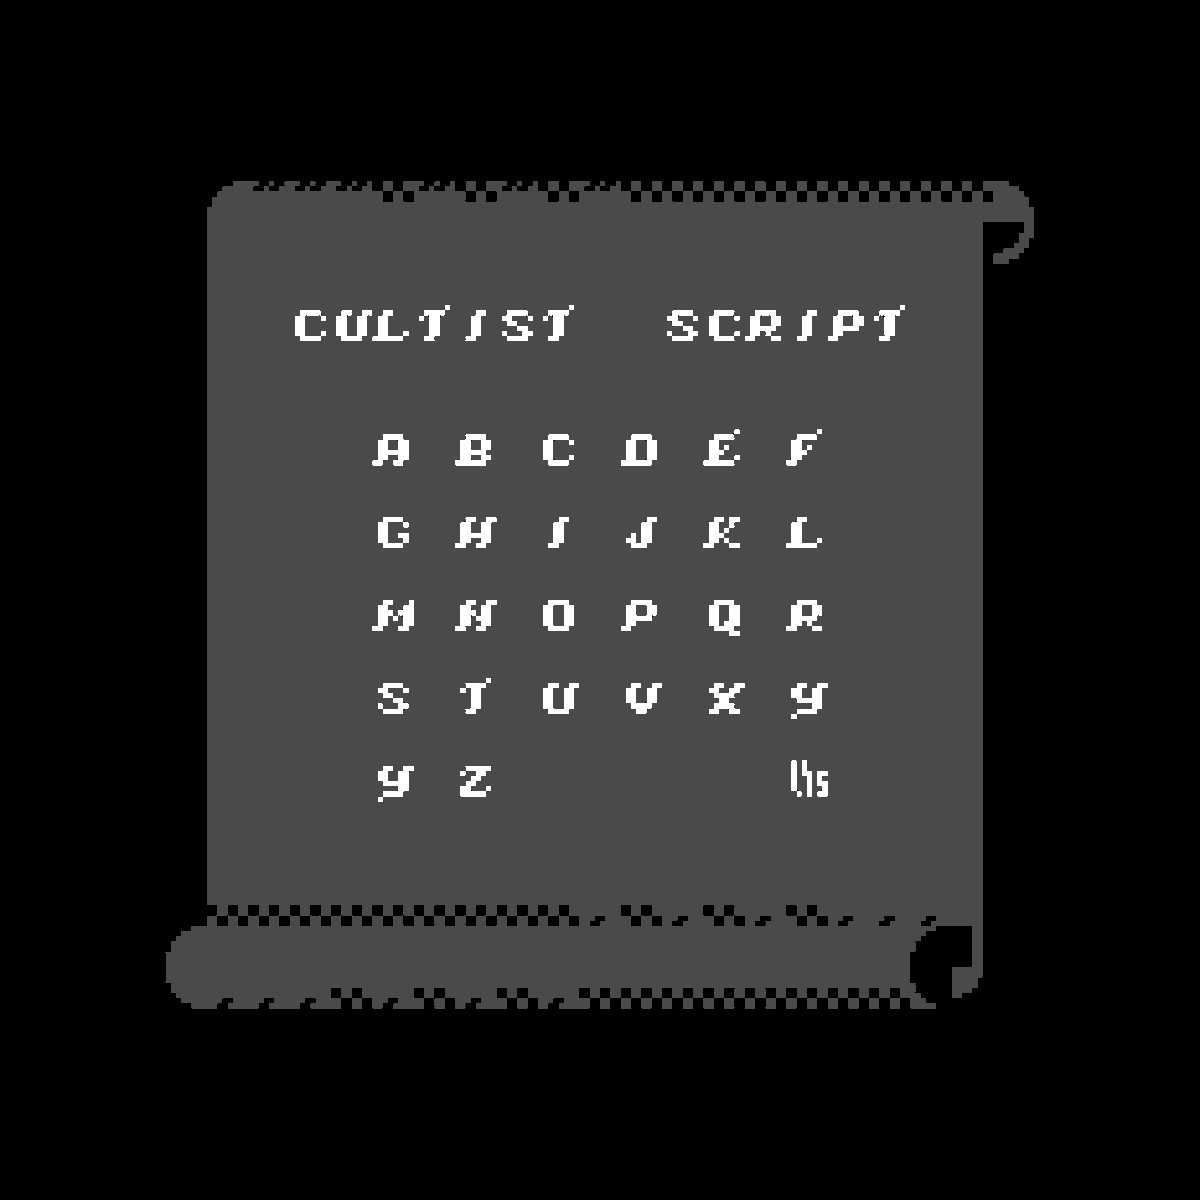 Cultist Script | Available for C64 at buff.ly/3UzWltG

#ascii #asciiart #art #bbs #c64 #commodore64 #computer #computerart #demoscene #digital #petscii #petsciiart #text #textart #textmode #textpunk #8bit #8bitart #typeface #typefacedesign #font #fontdesign #cultist